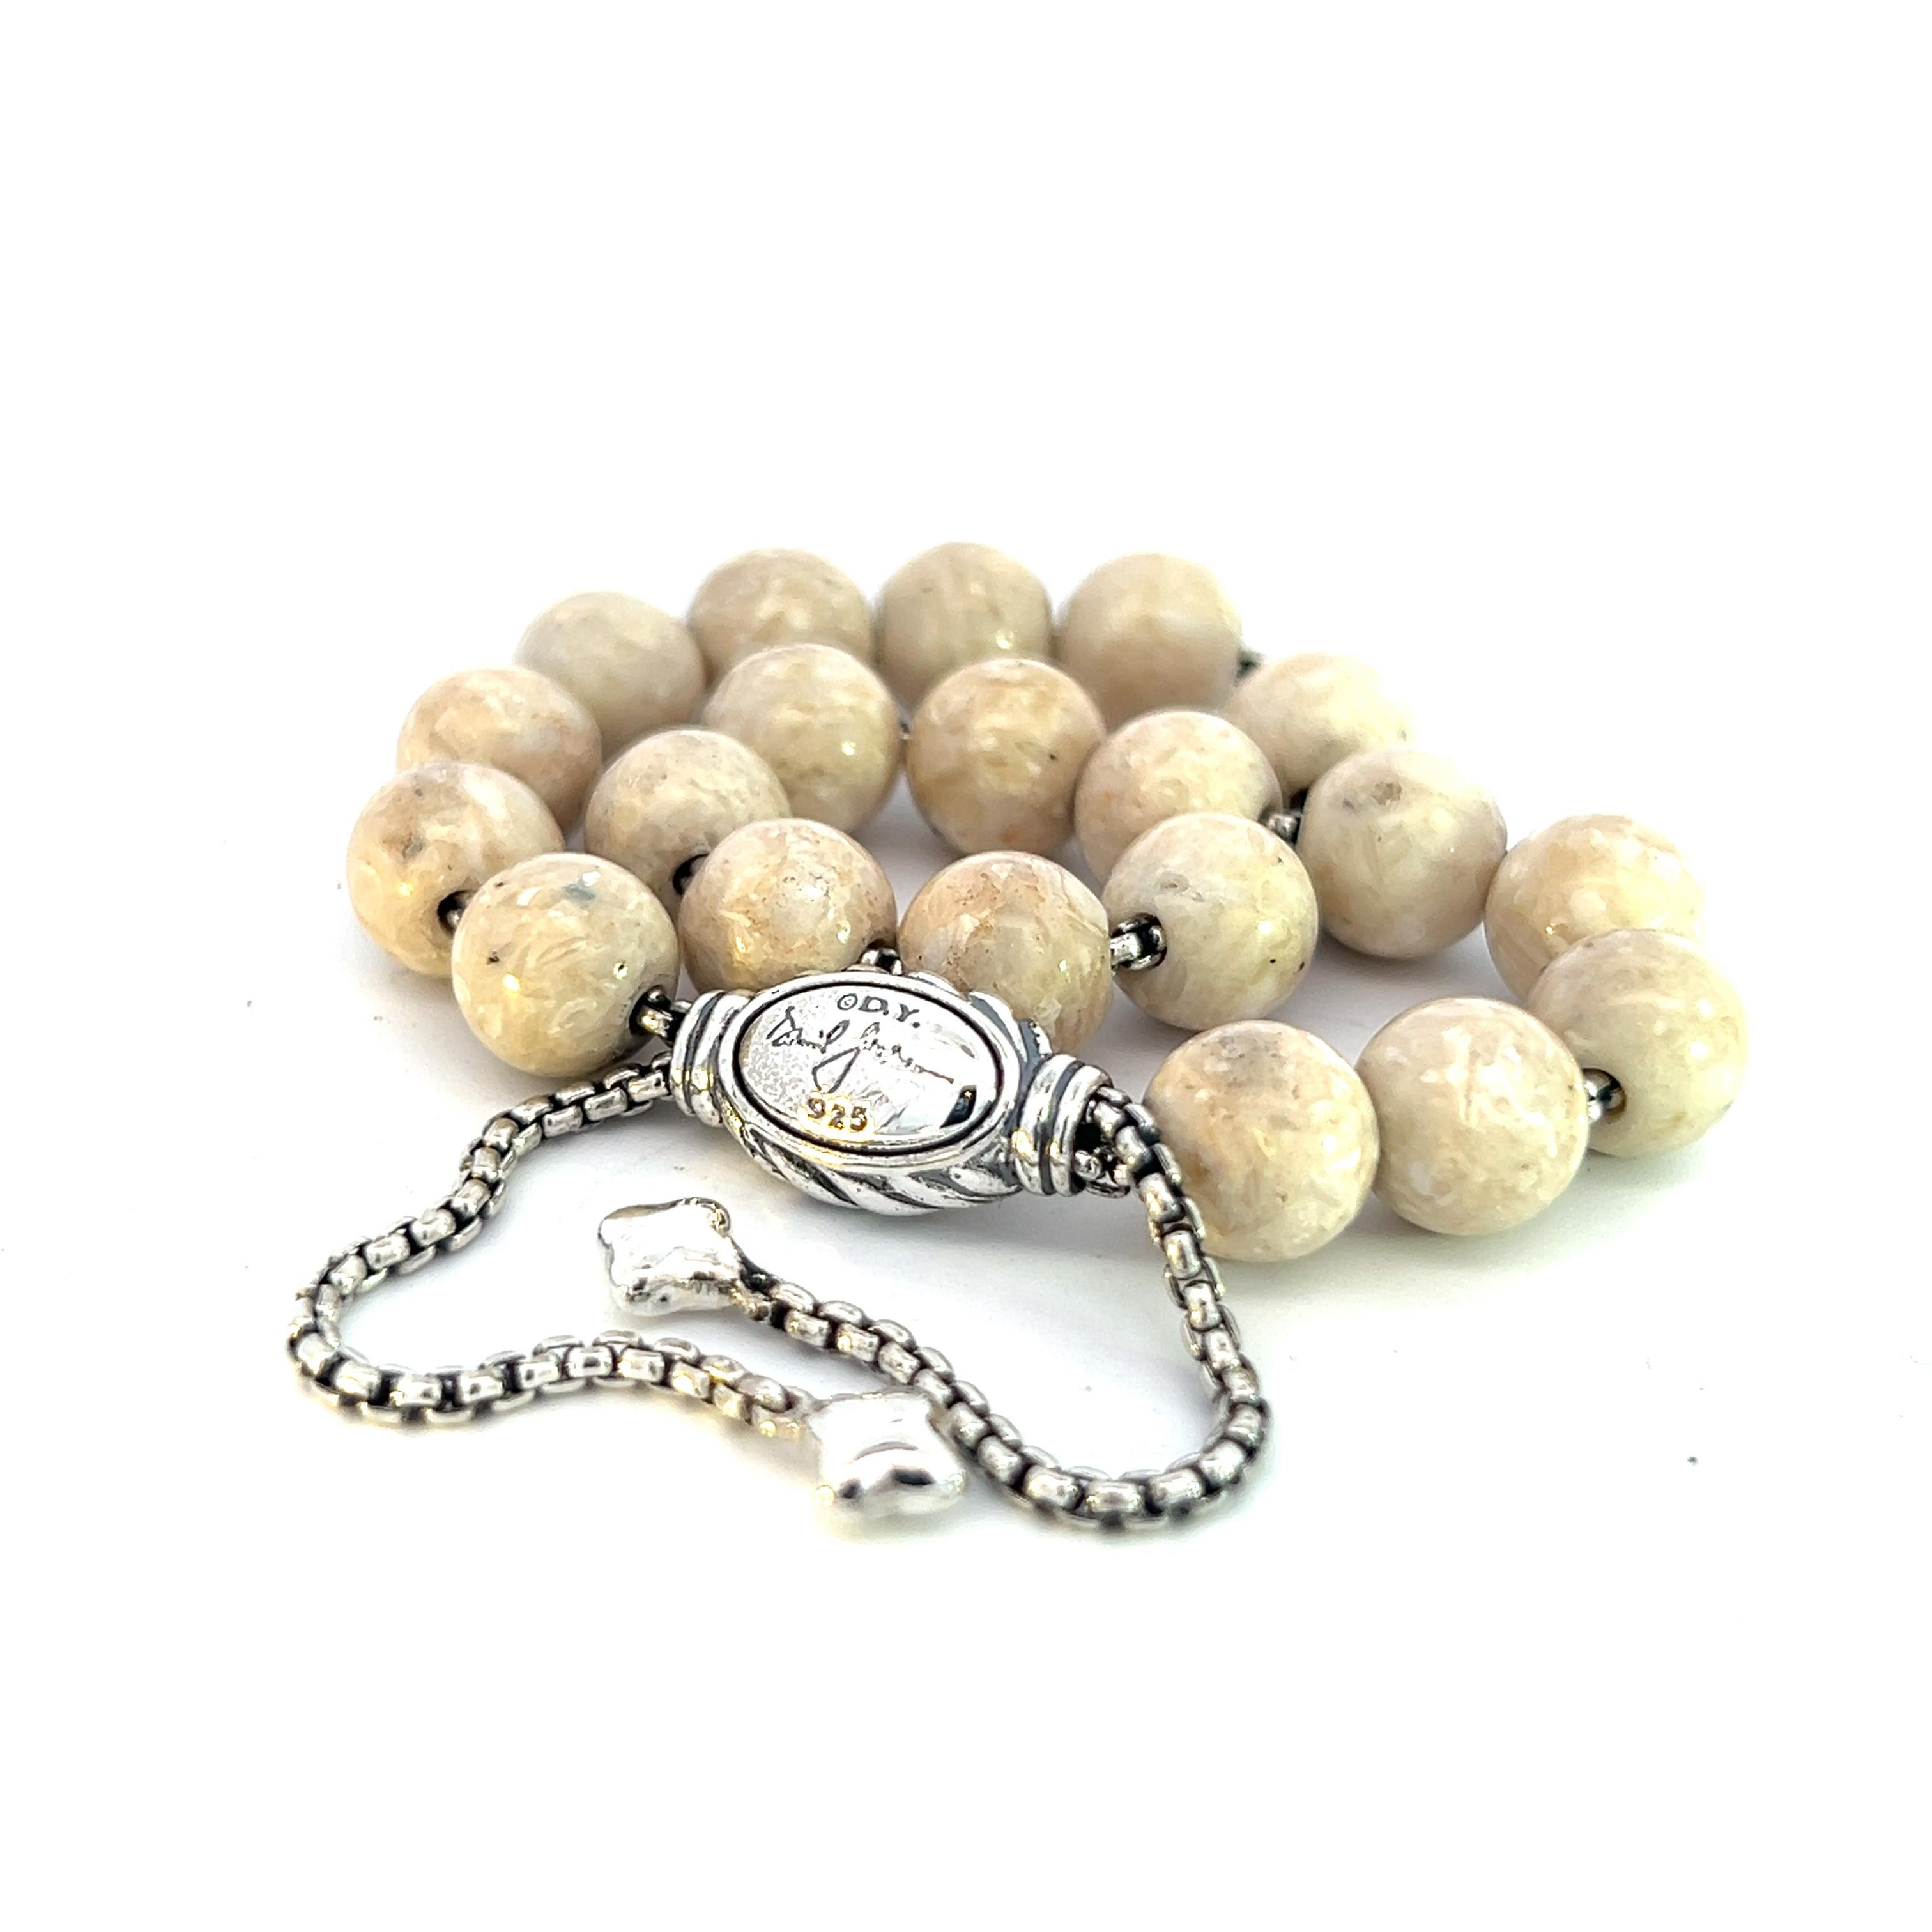 David Yurman Authentic Estate River Stone Spiritual Beads Bracelet 6.6 - 8.5